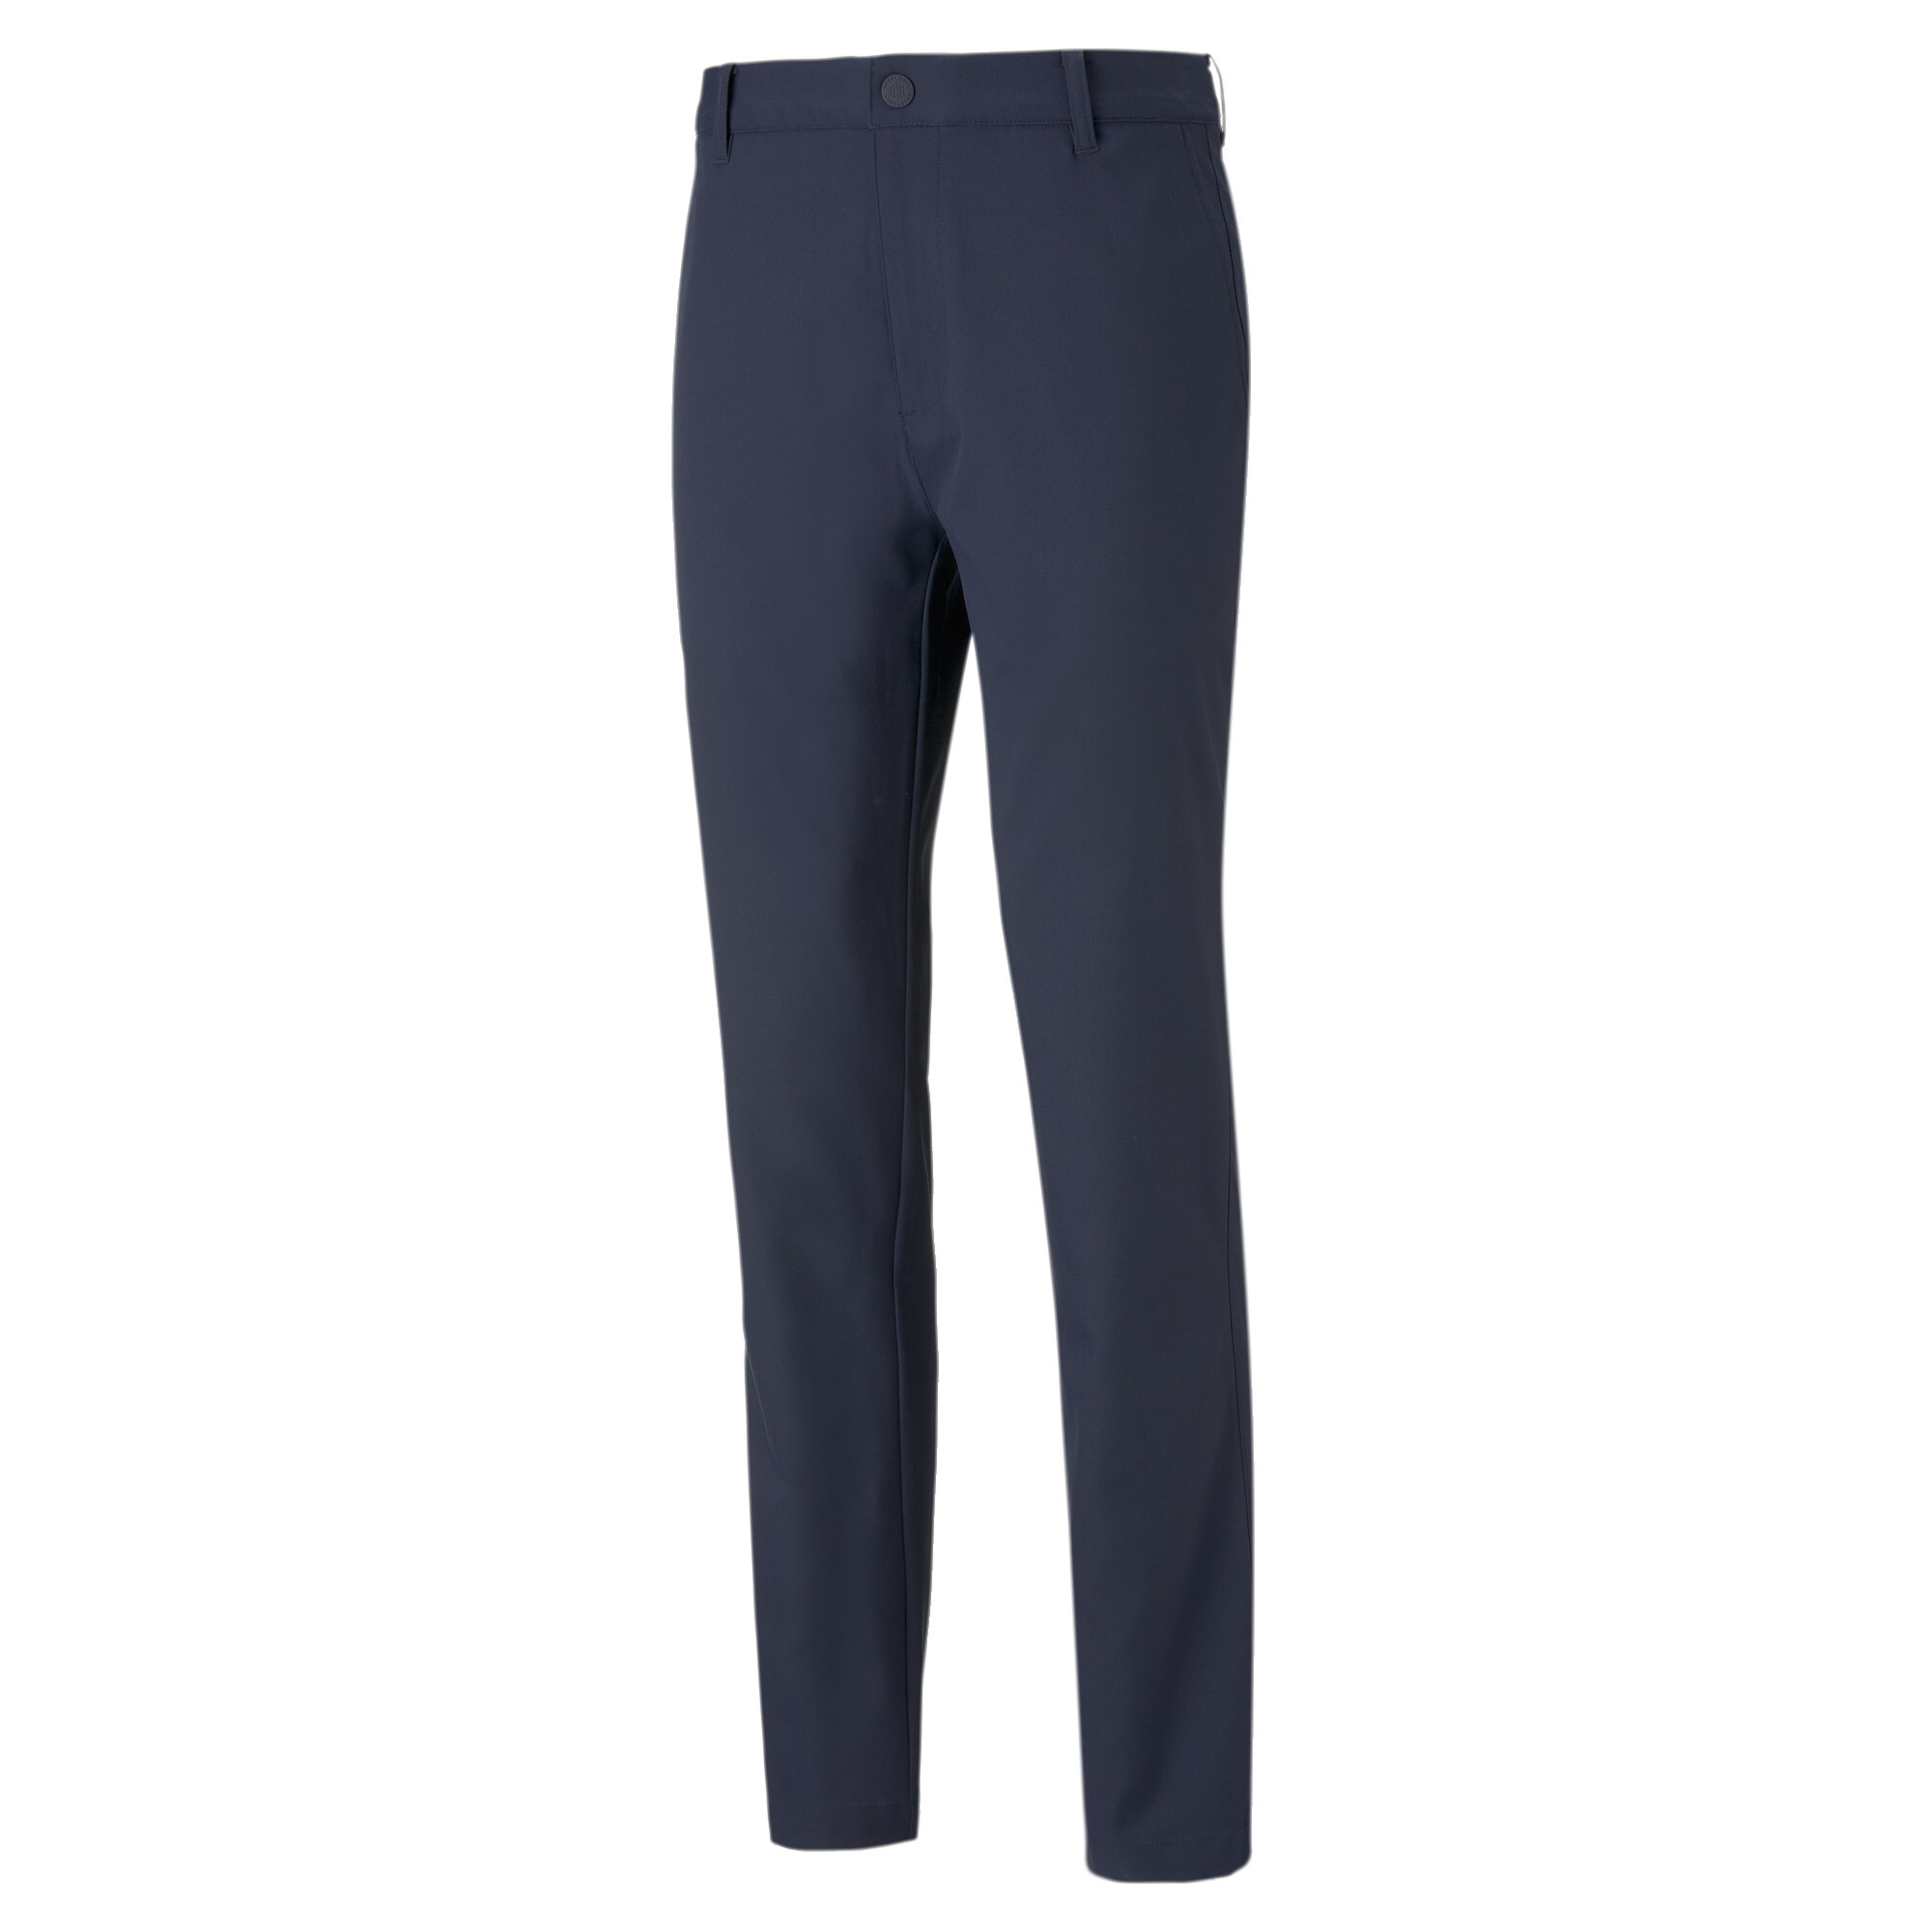 Men's Puma Dealer Golf Pants, Blue, Size 29/32, Clothing